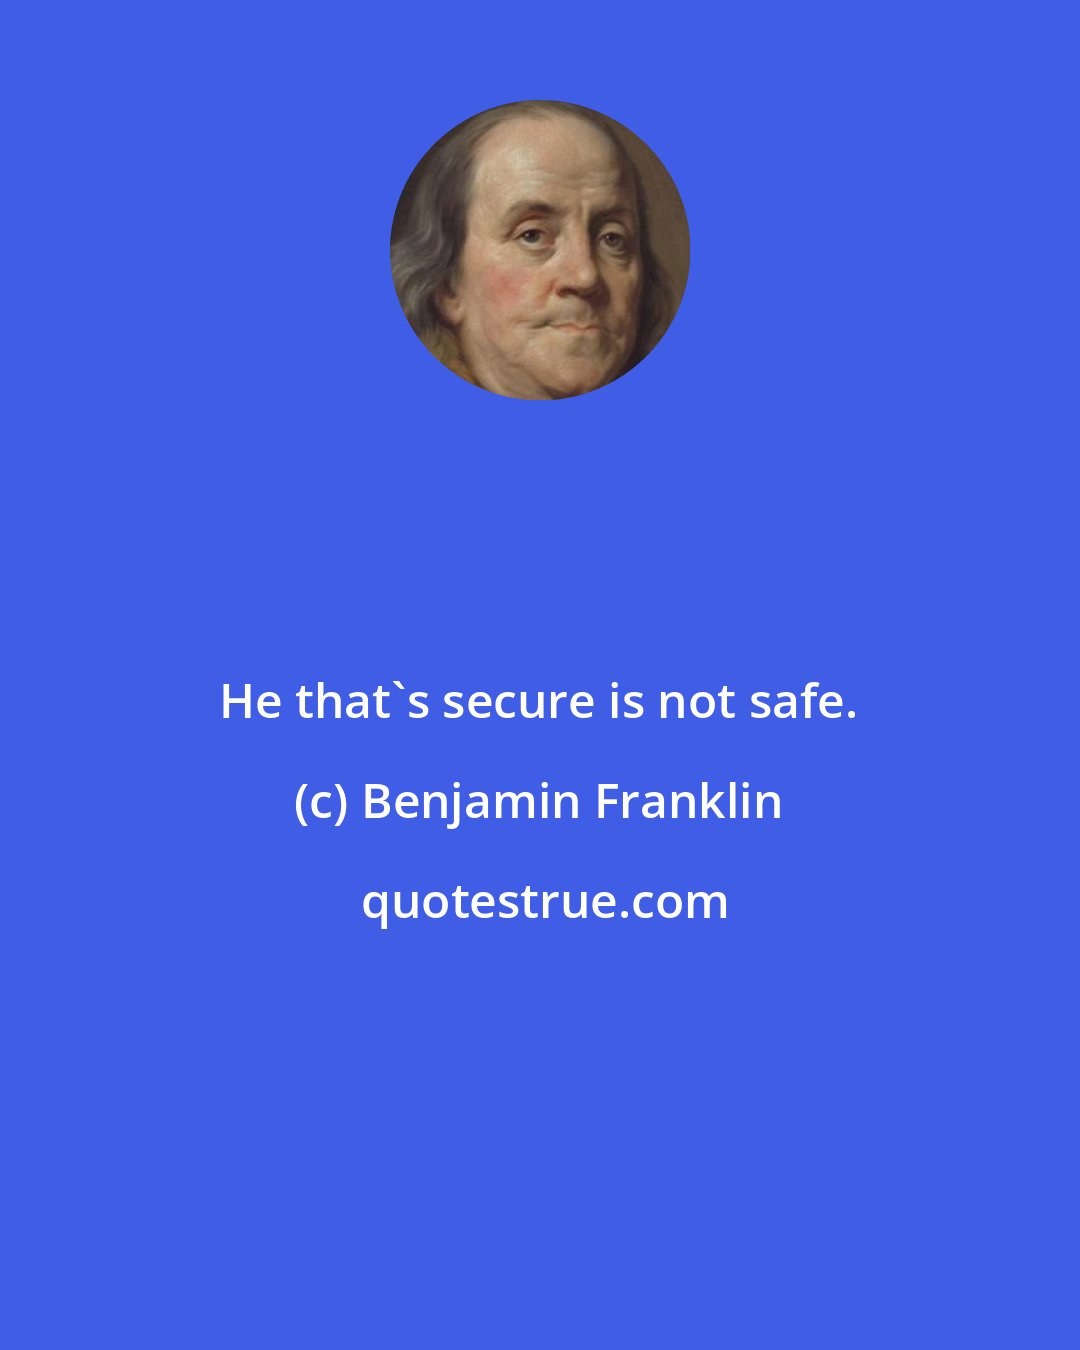 Benjamin Franklin: He that's secure is not safe.